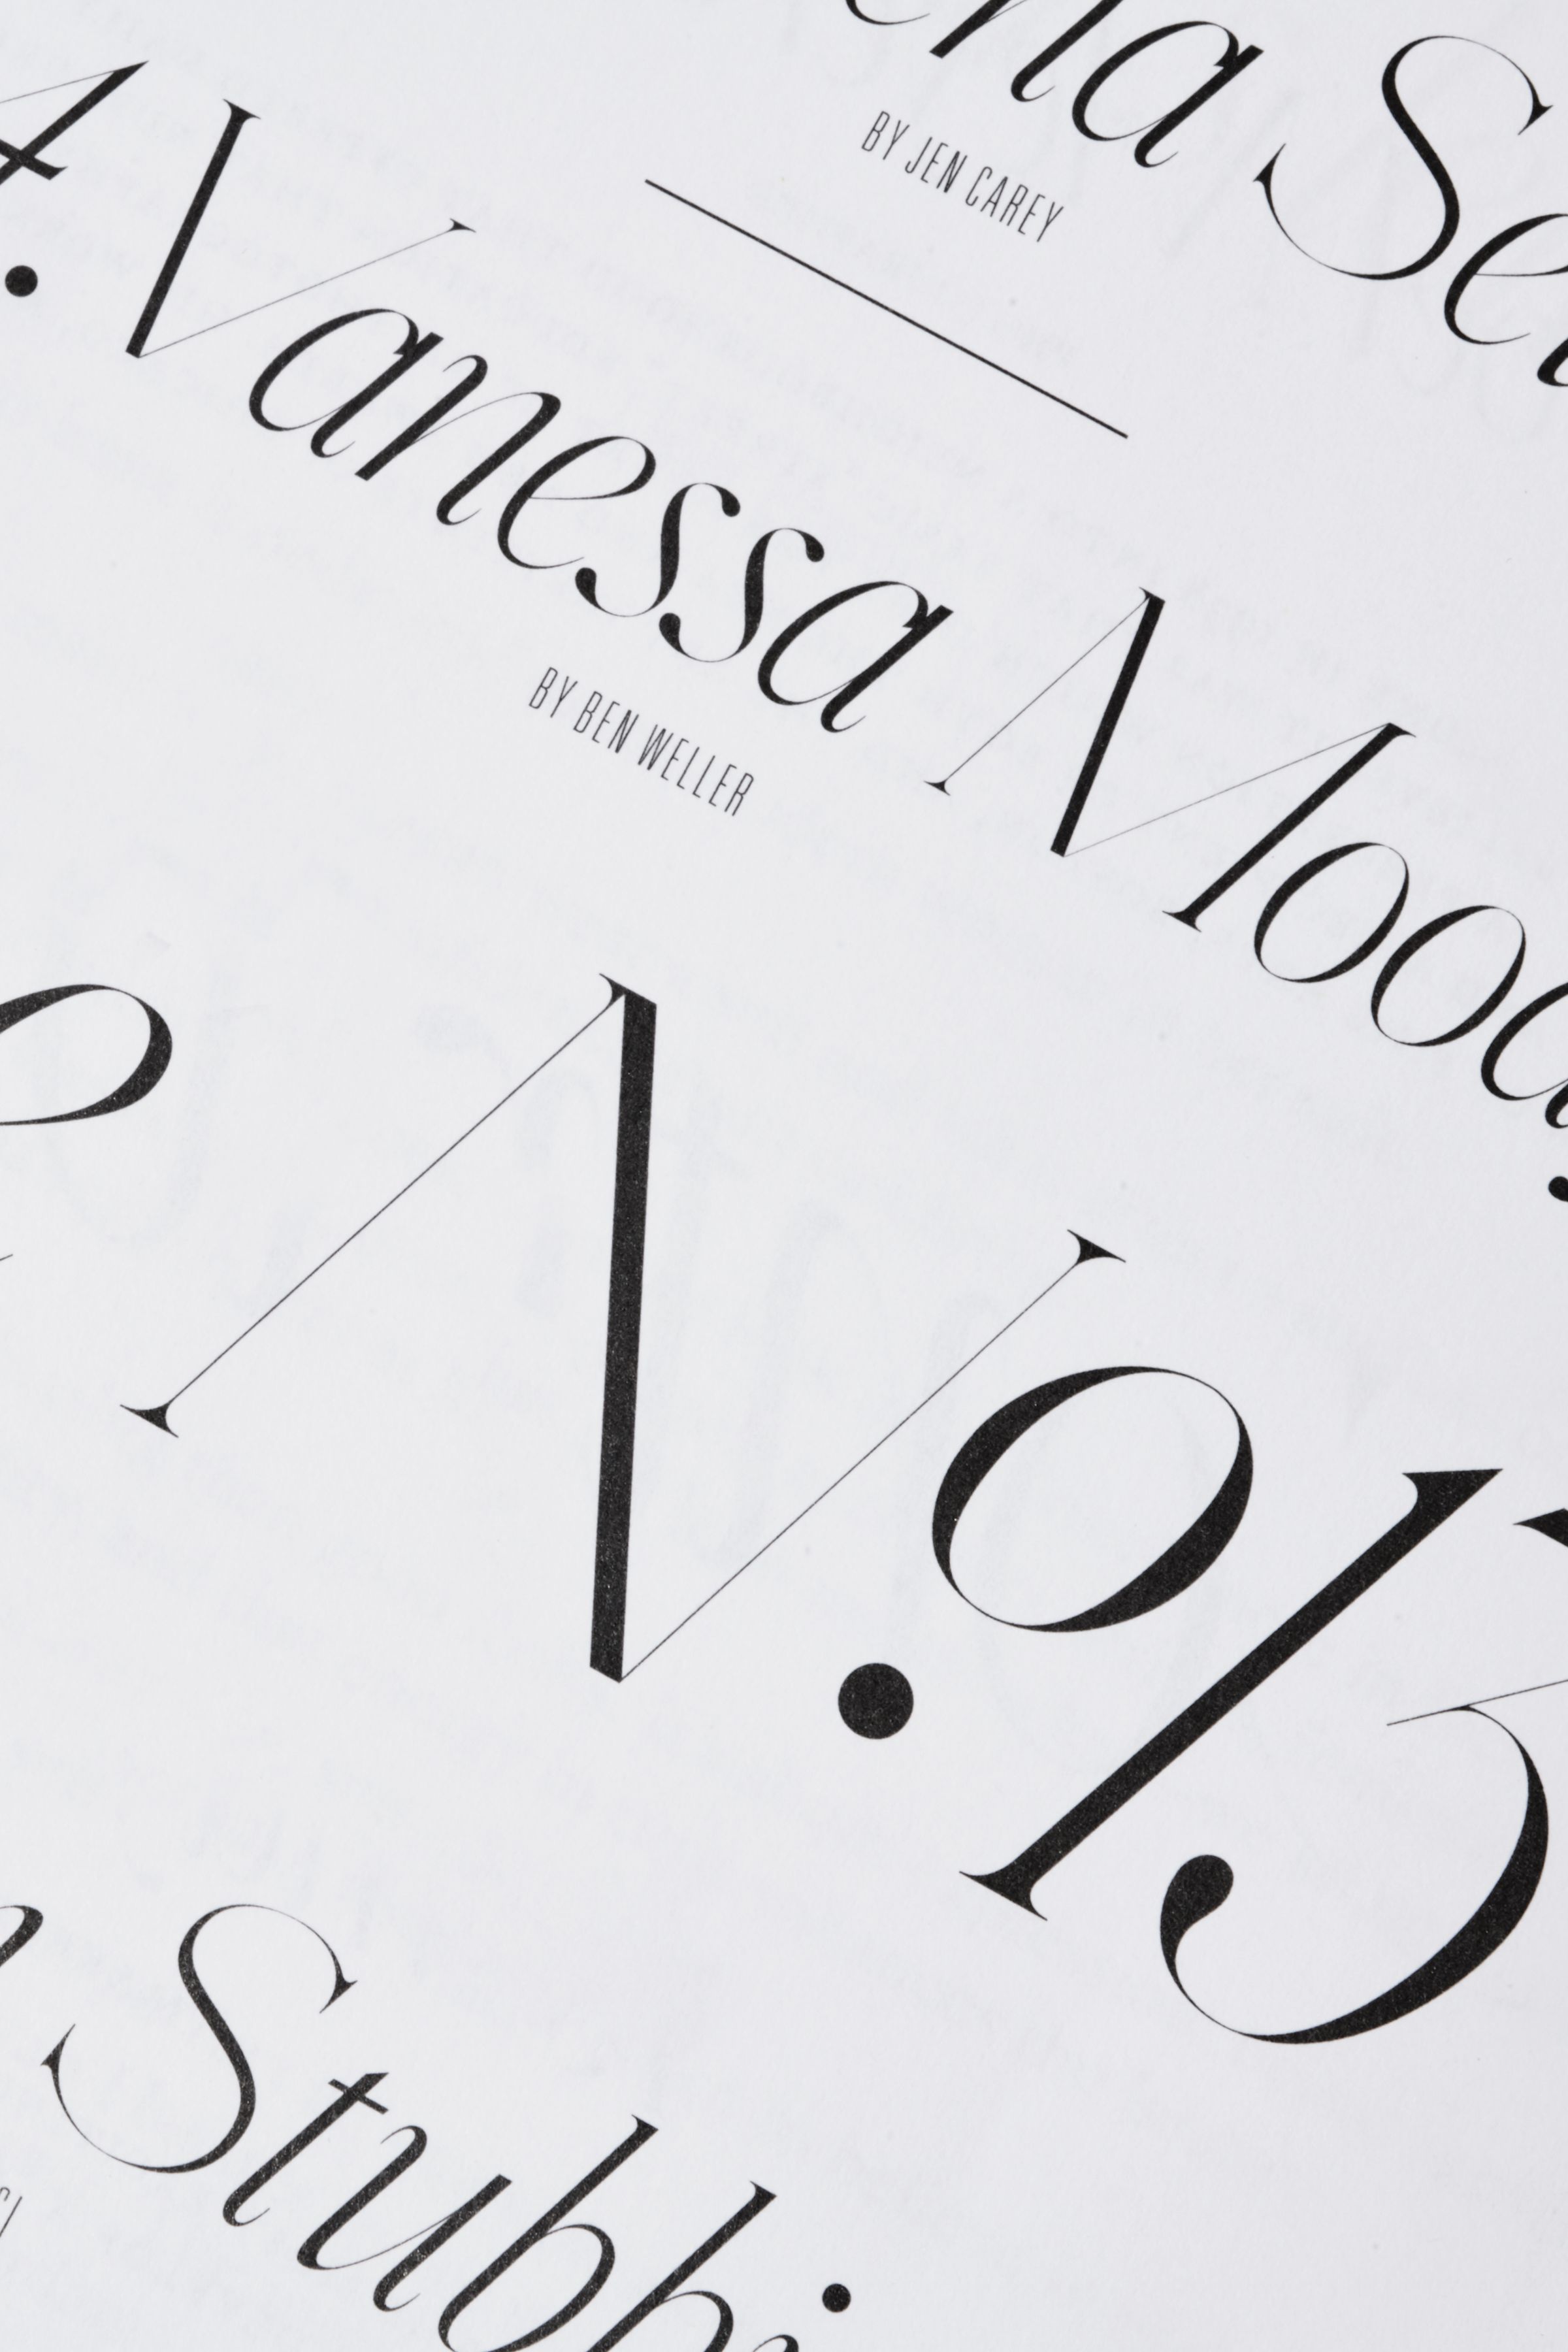 Rika Magazine issue no. 13 custom typeface design